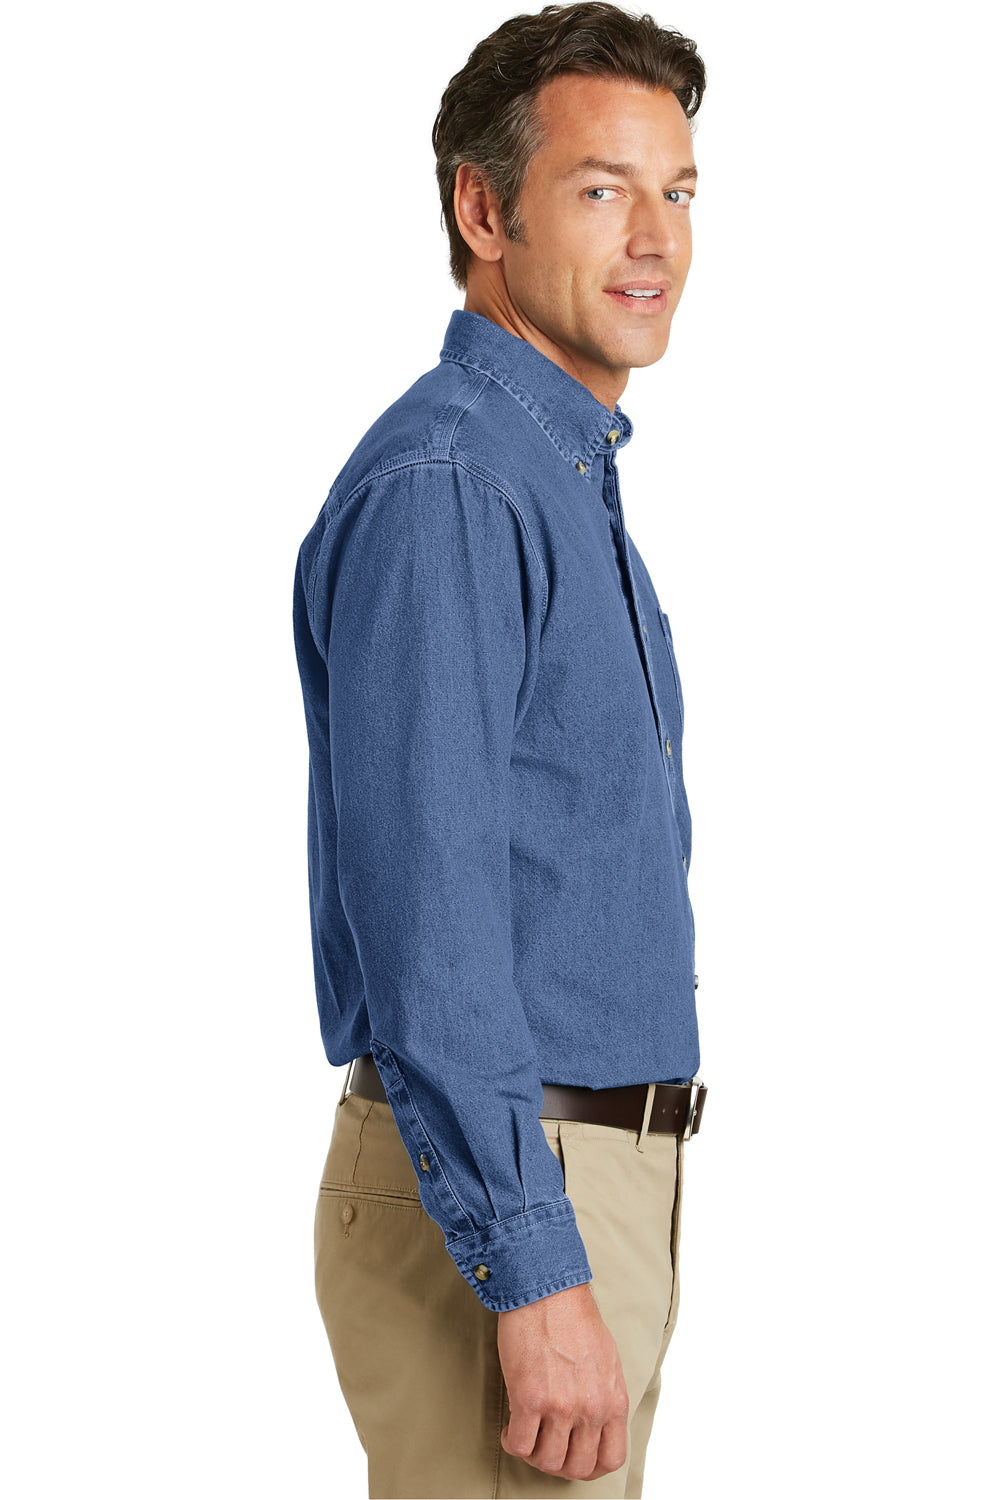 Port Authority S100 Mens Denim Long Sleeve Button Down Shirt w/ Pocket Blue Side